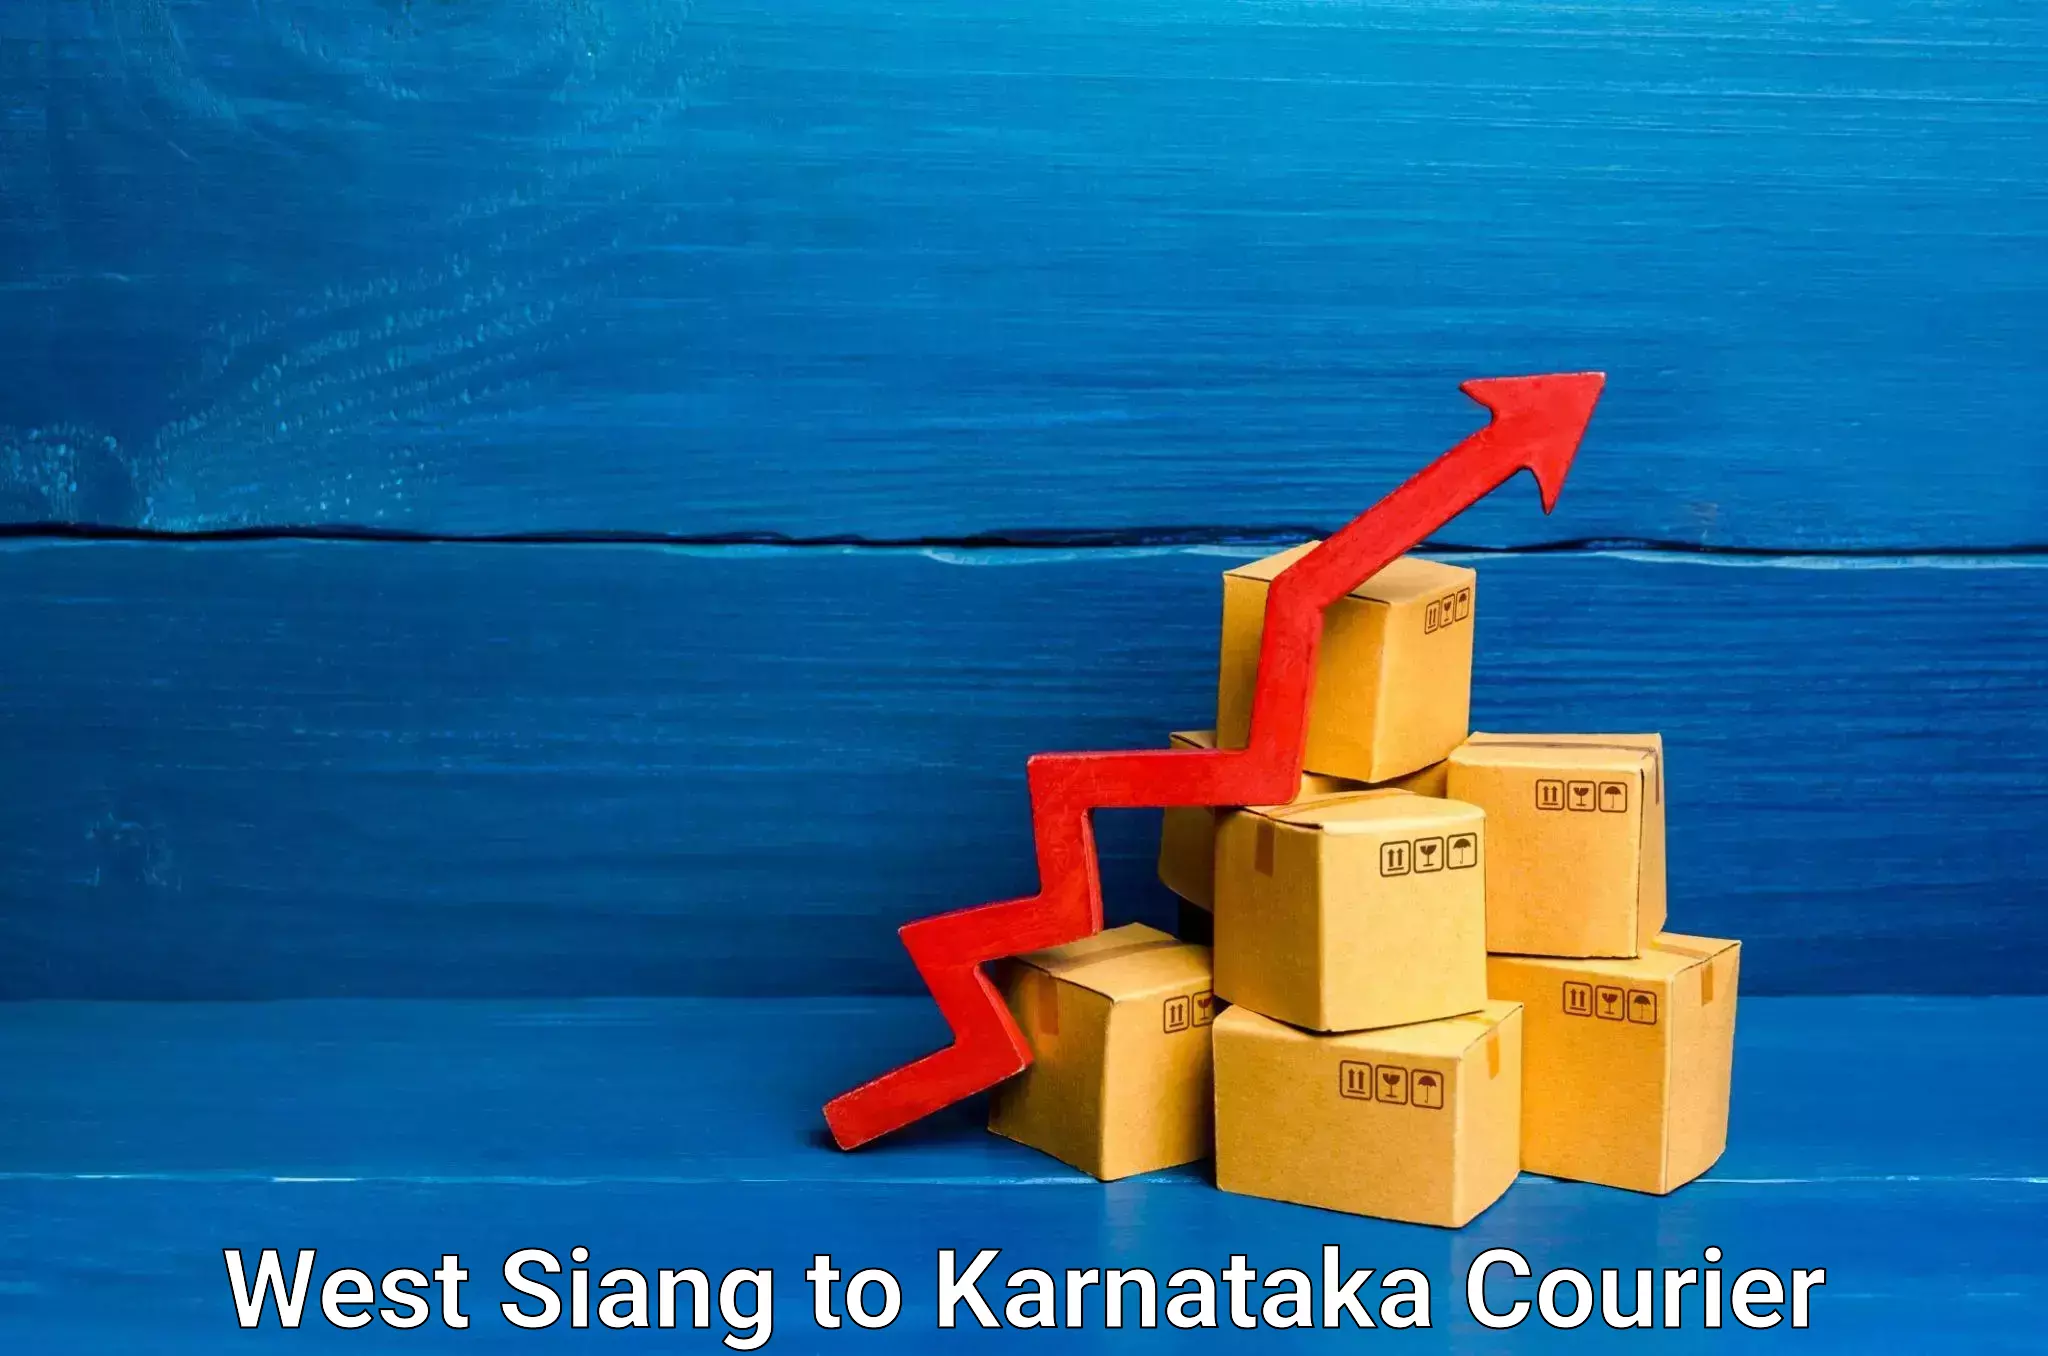 Courier insurance West Siang to Karnataka